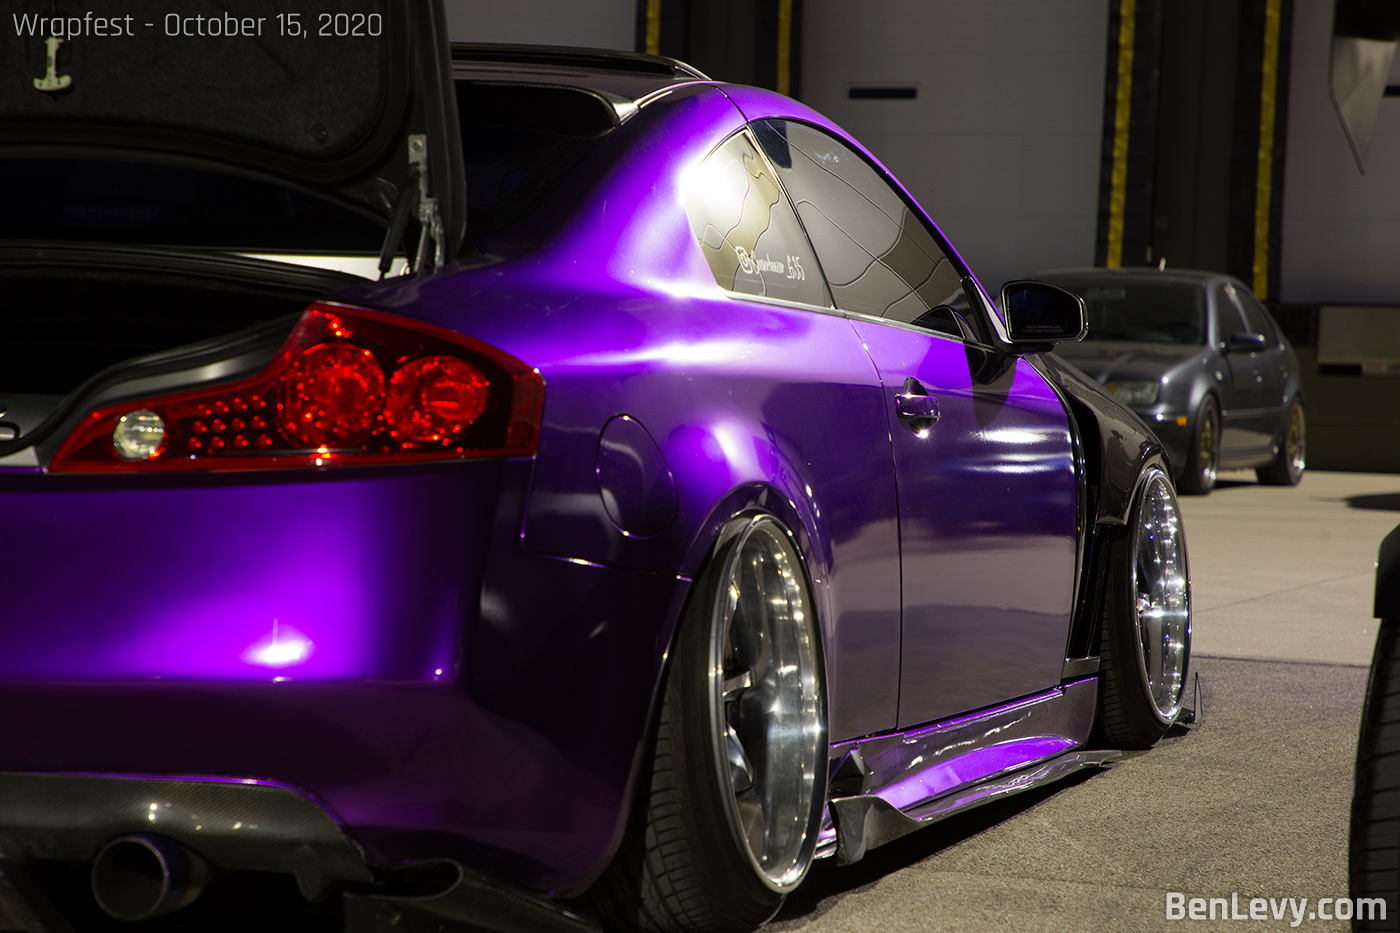 Purple Infiniti G35 Coupe